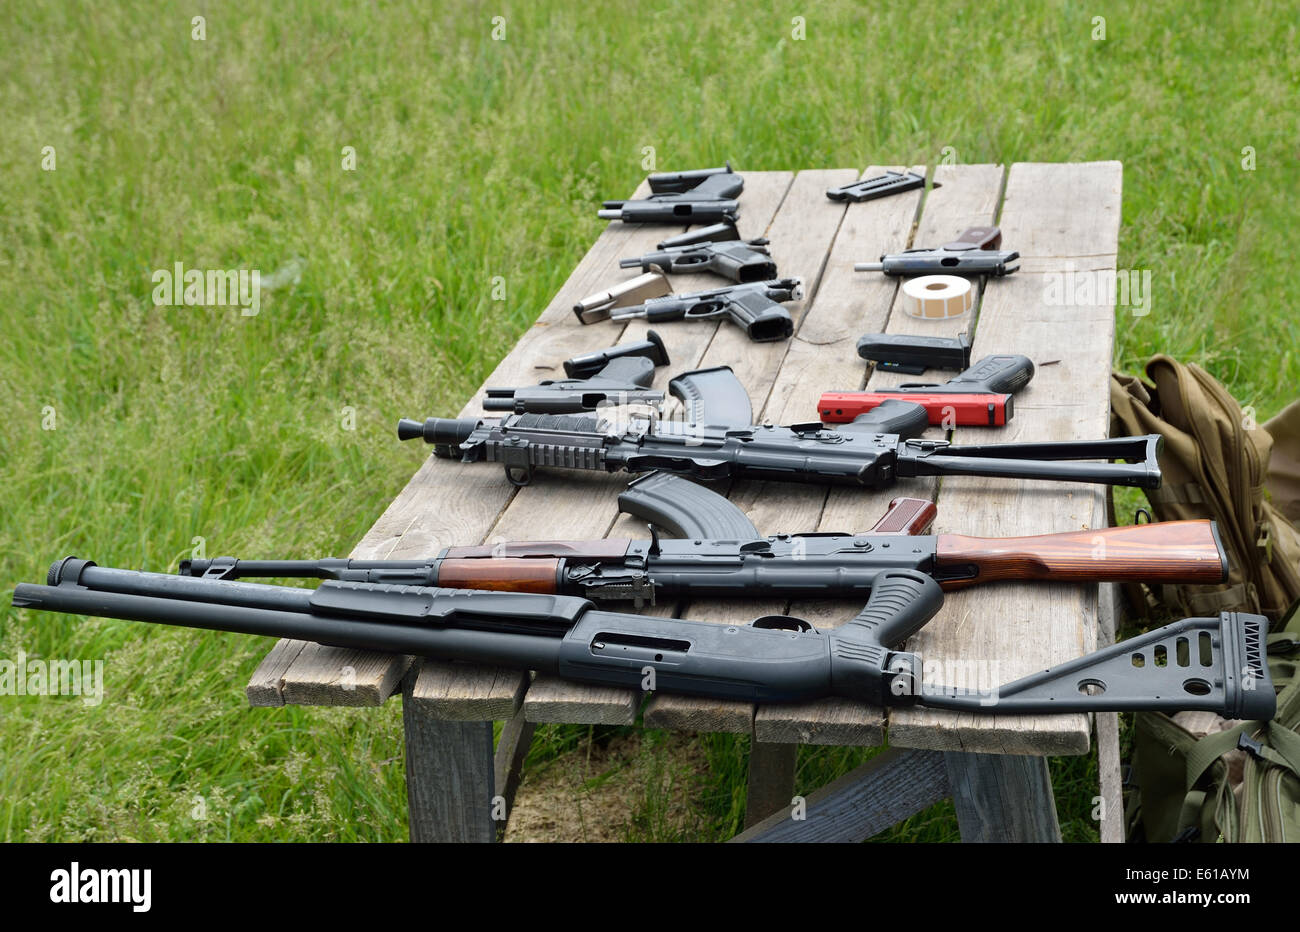 Firearm on the table Stock Photo